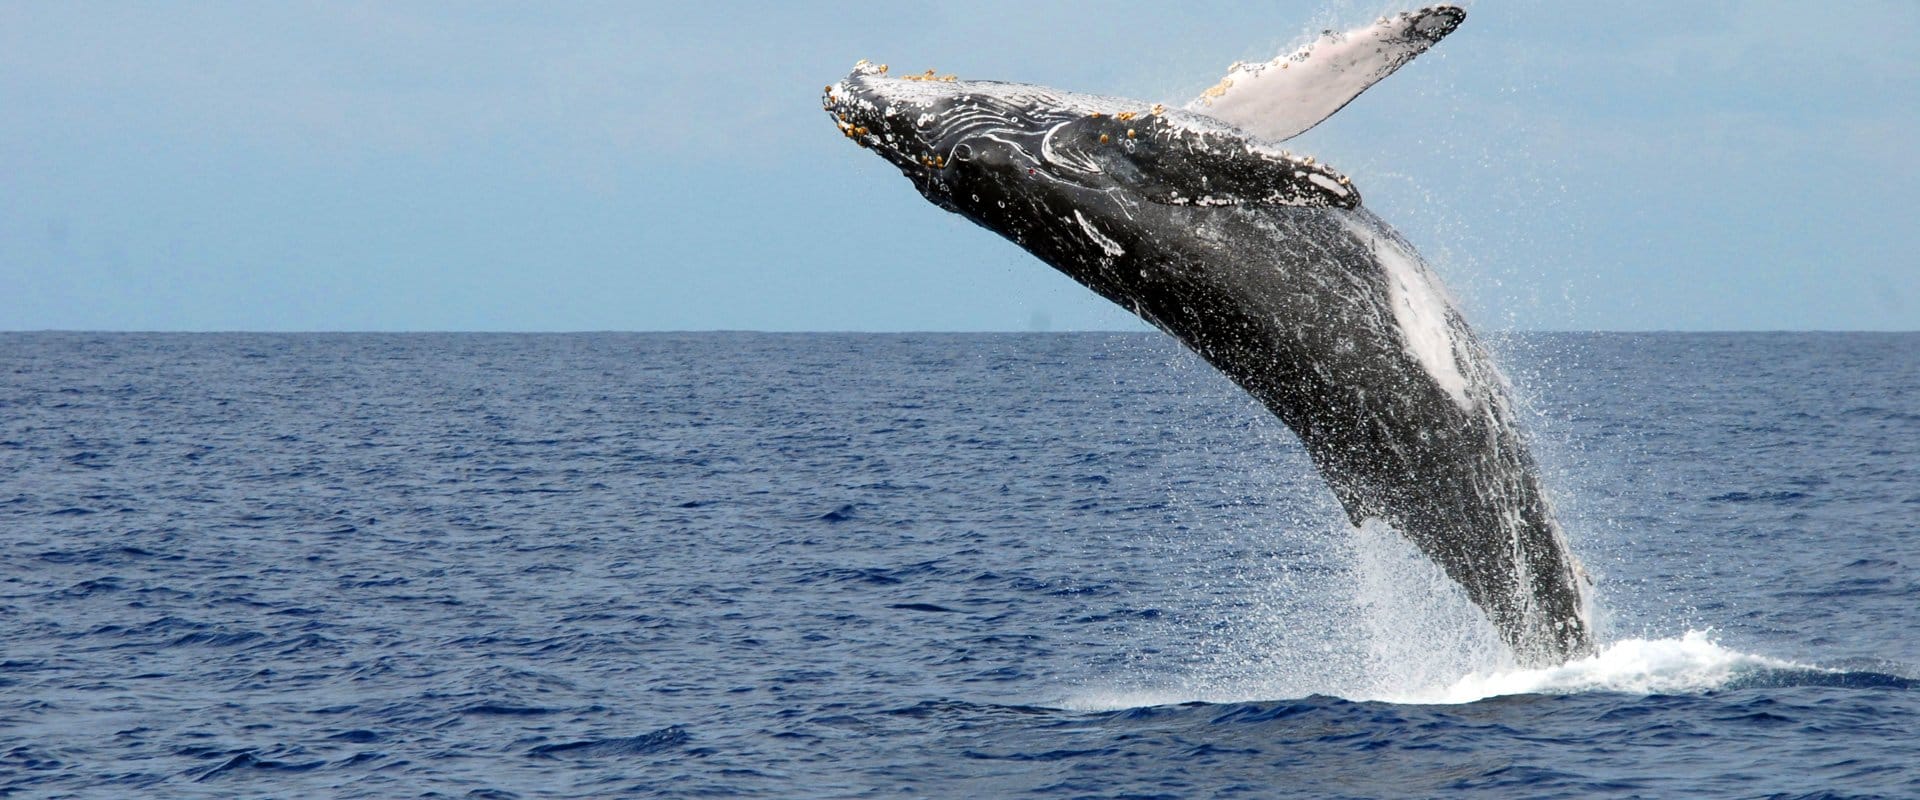 Humpback whales return to Hawaiian waters